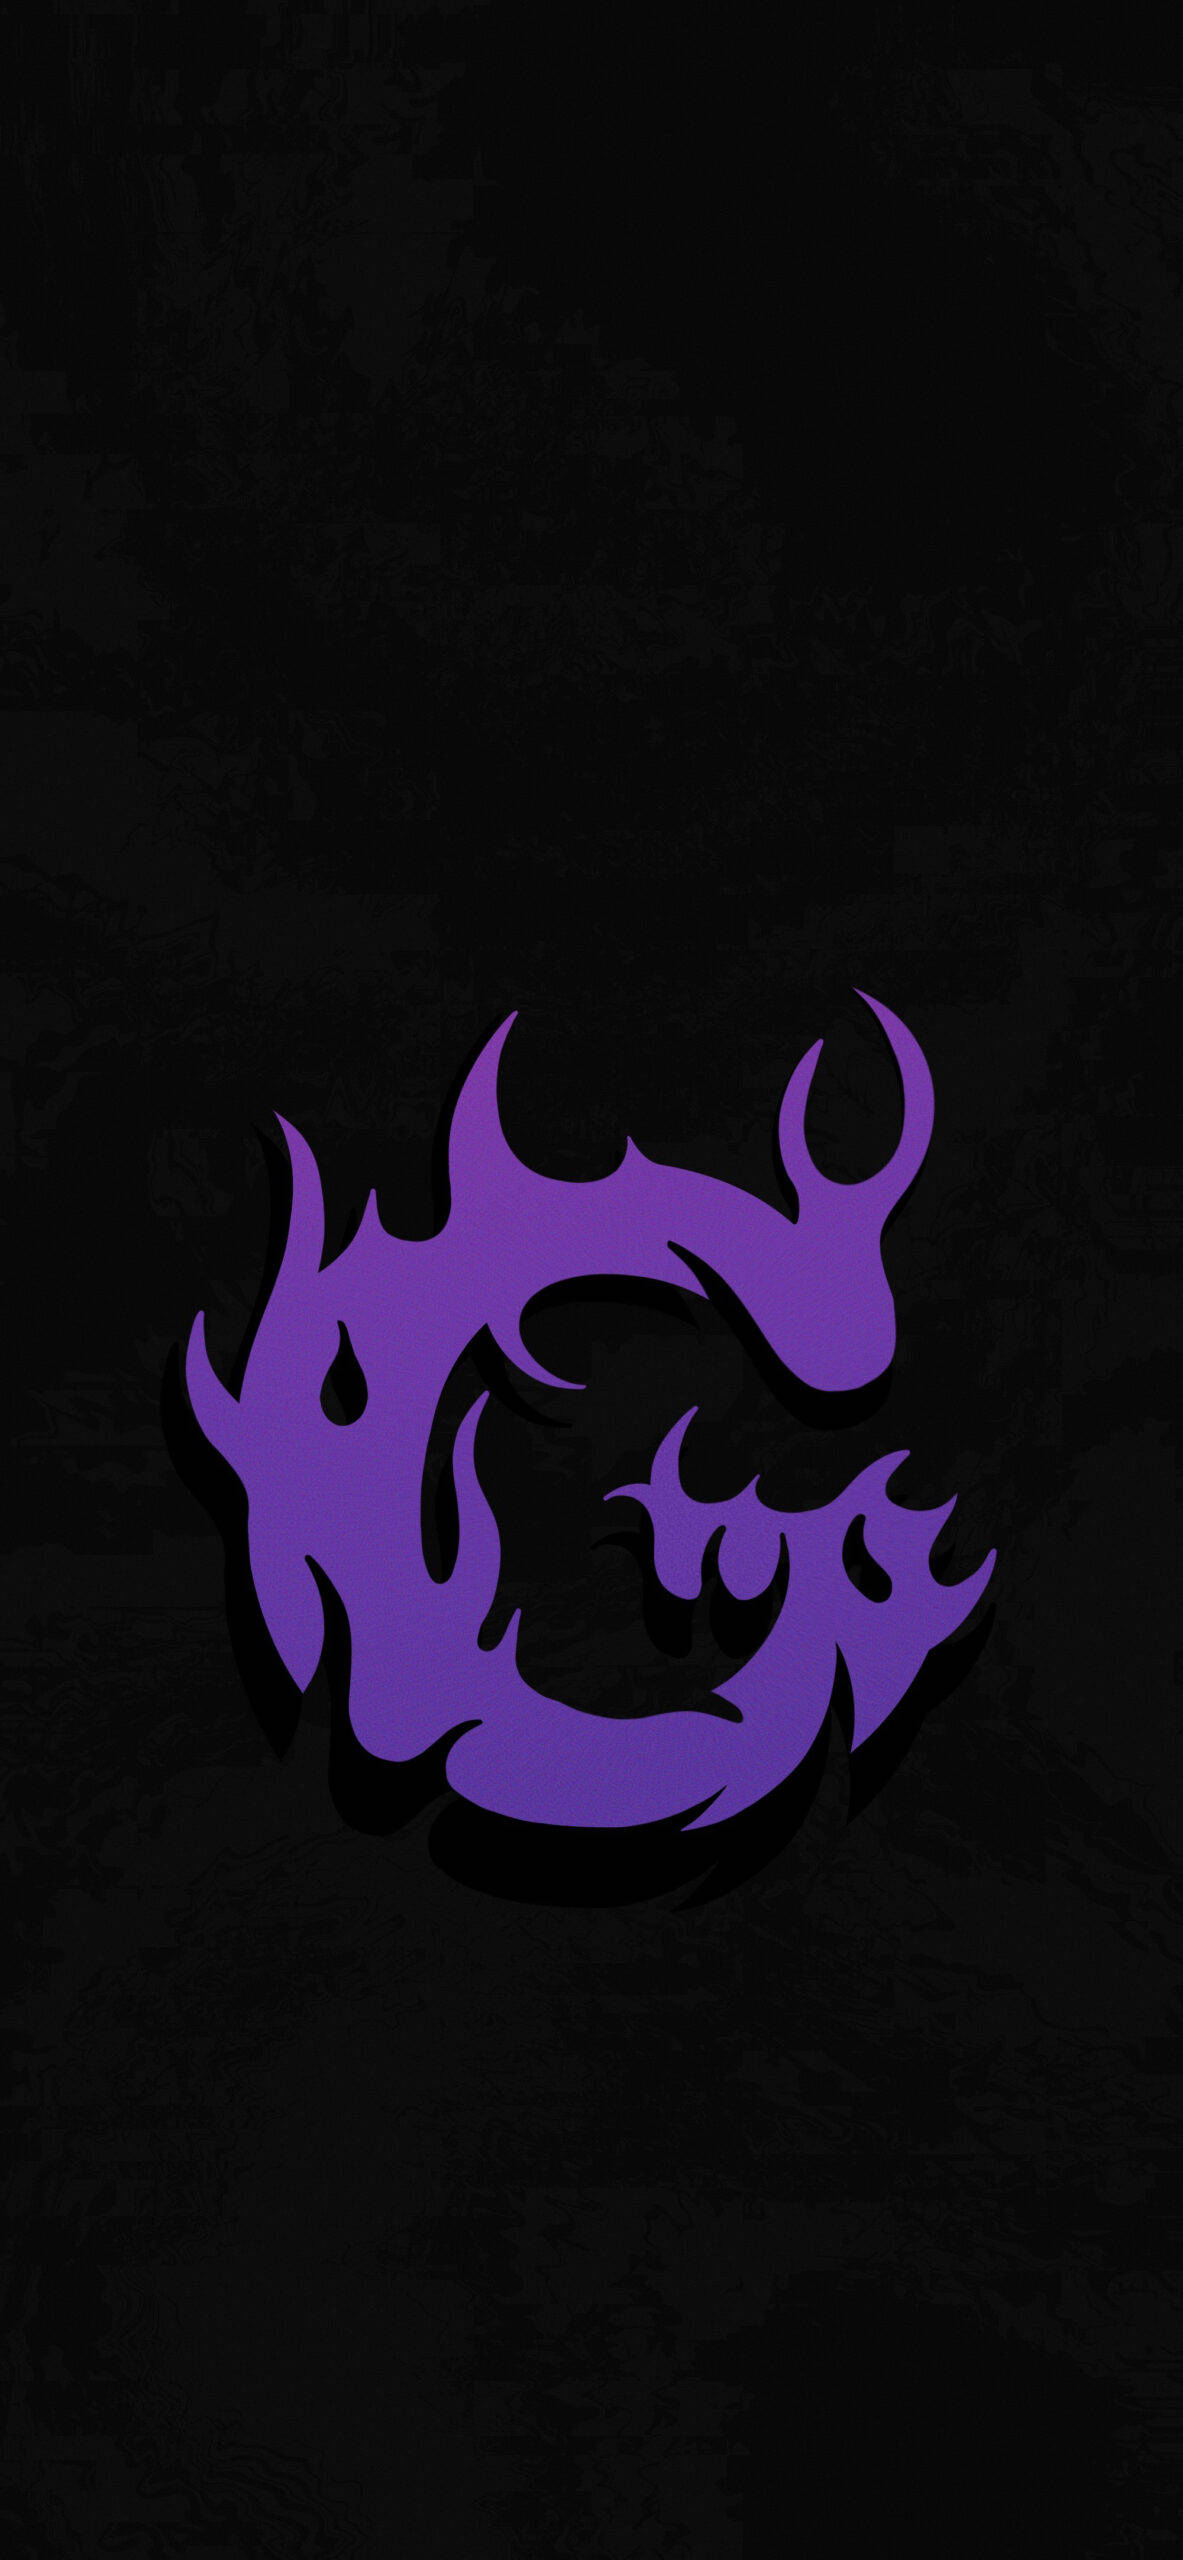 1183x2560 Download Letter G In Purple Flames Wallpaper